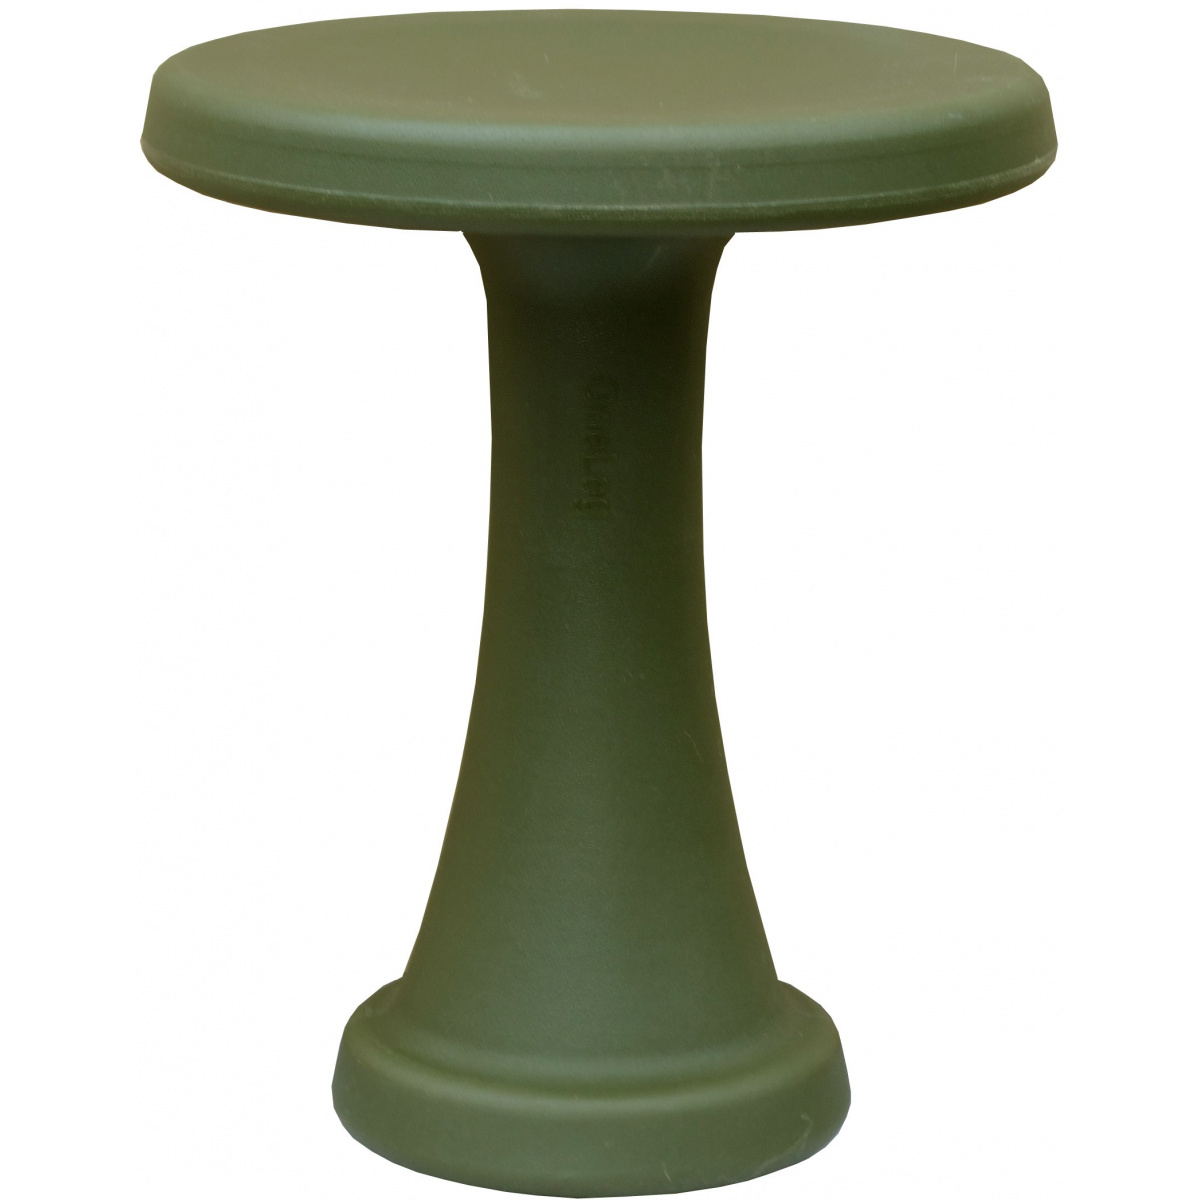 OneLeg stool, 32 cm - dark green